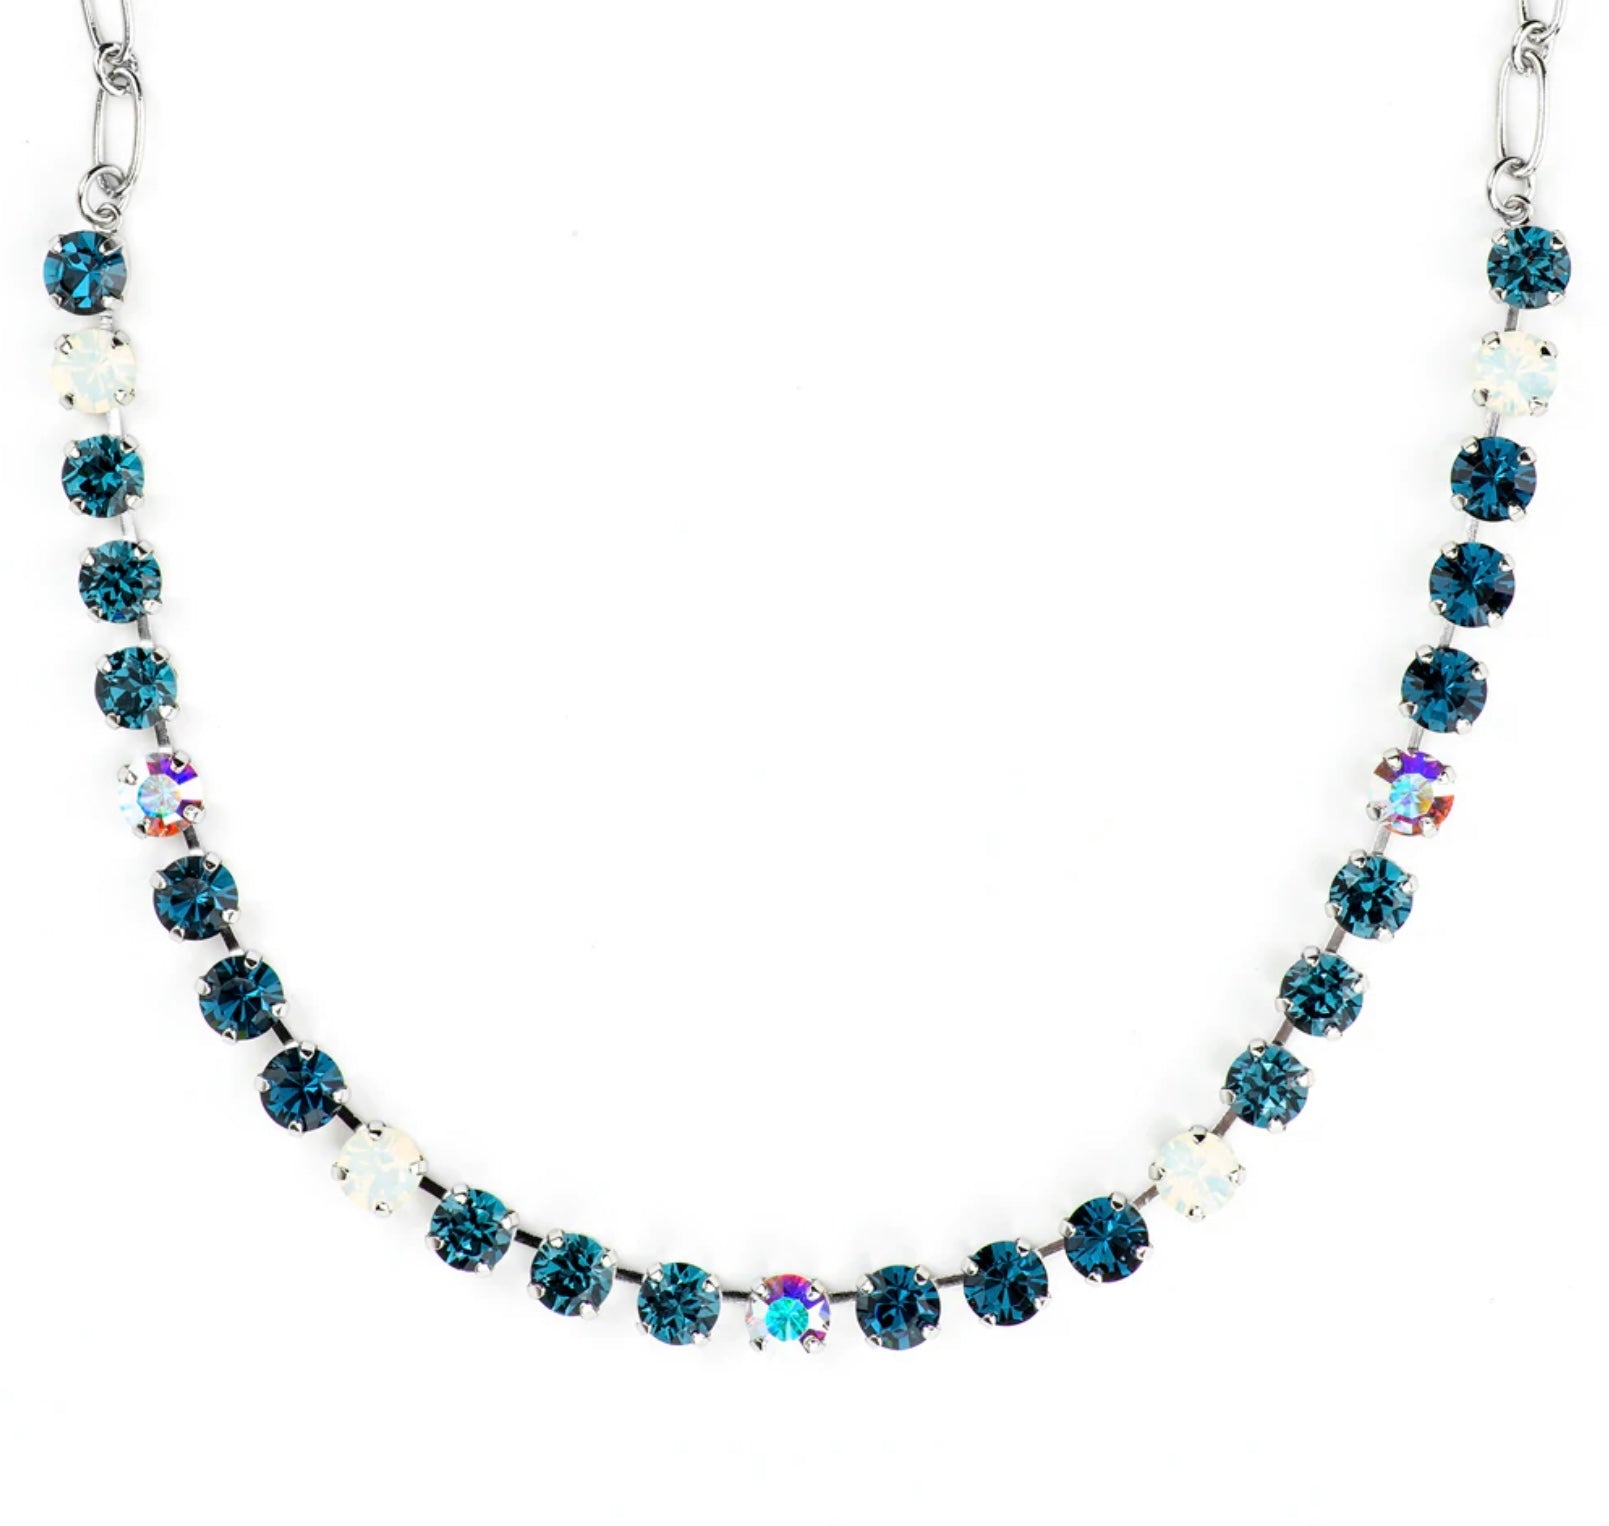 Mariana Antique Silver Must-Have Everyday Crystal Necklace in "Mood Indigo"